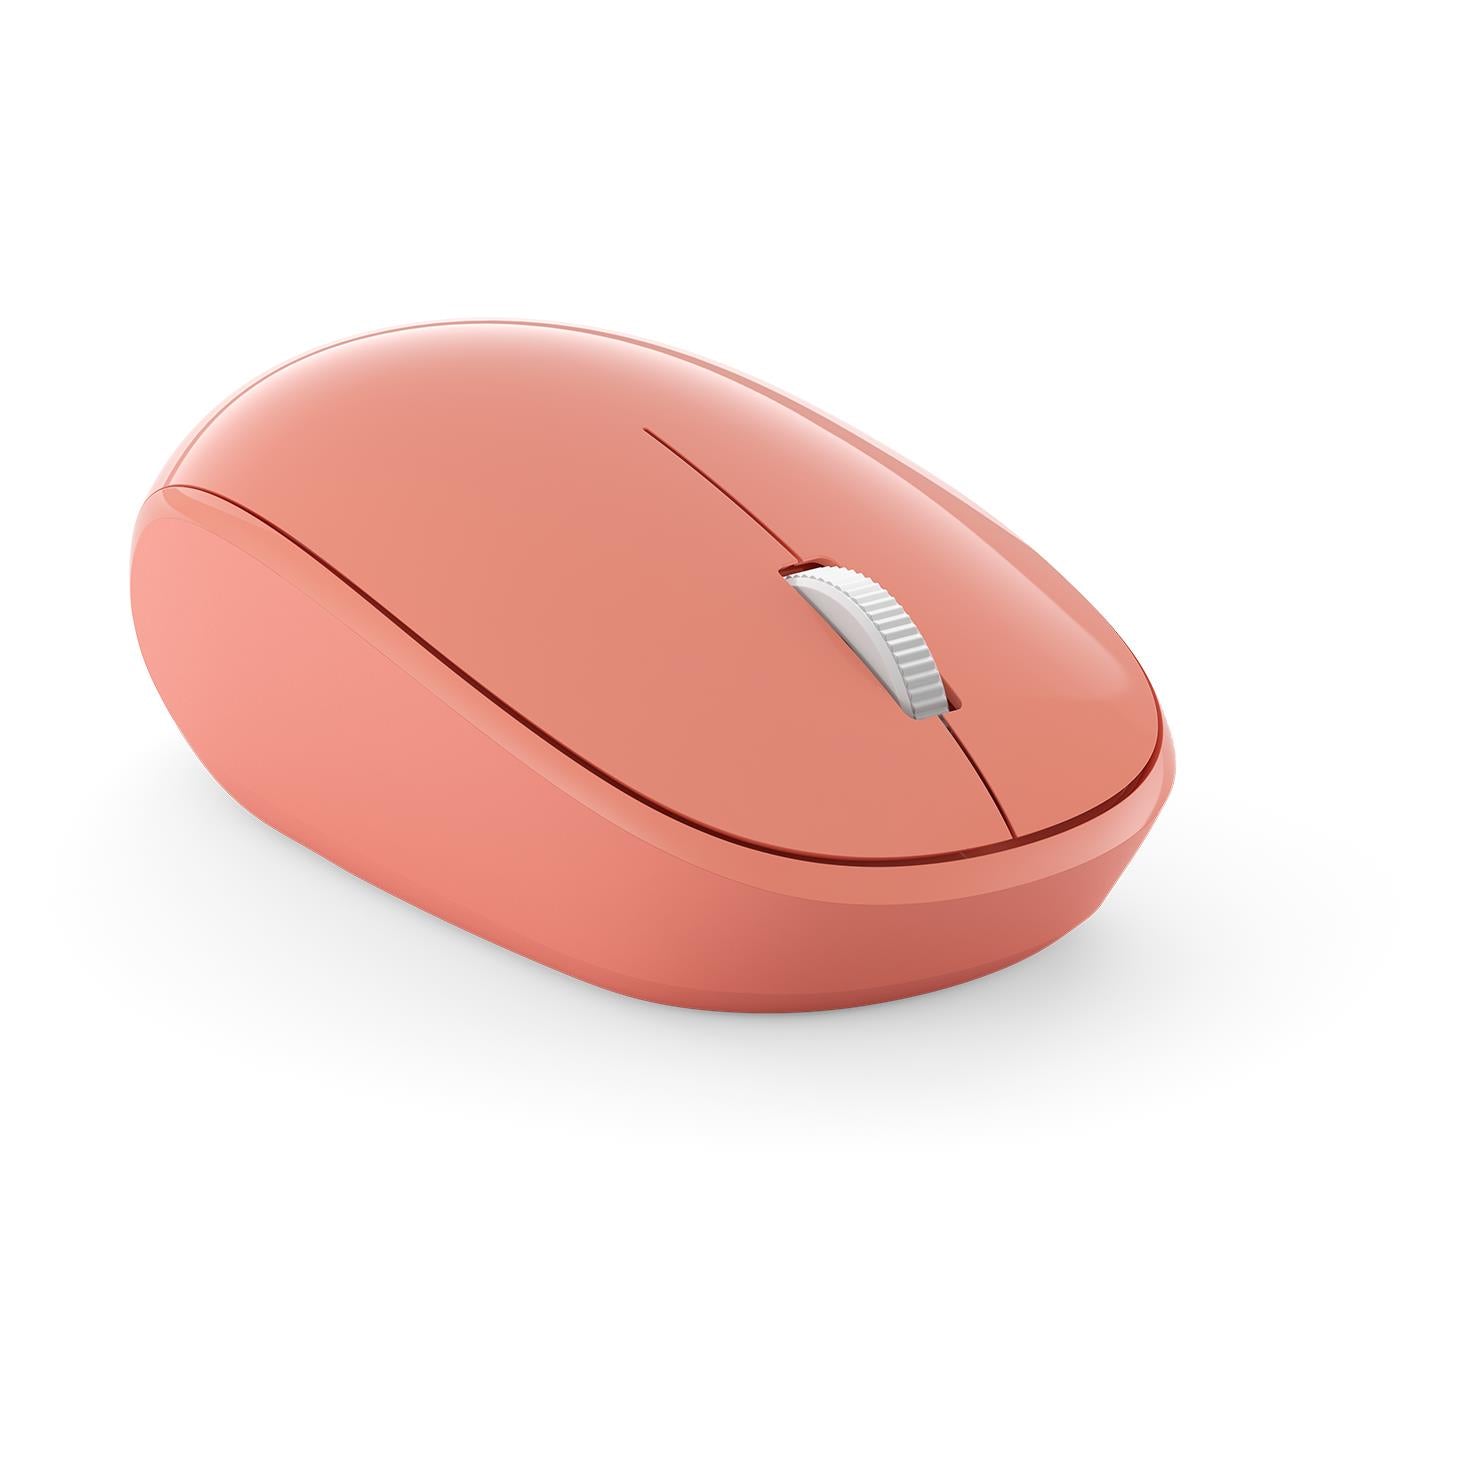 microsoft bluetooth mouse (peach)